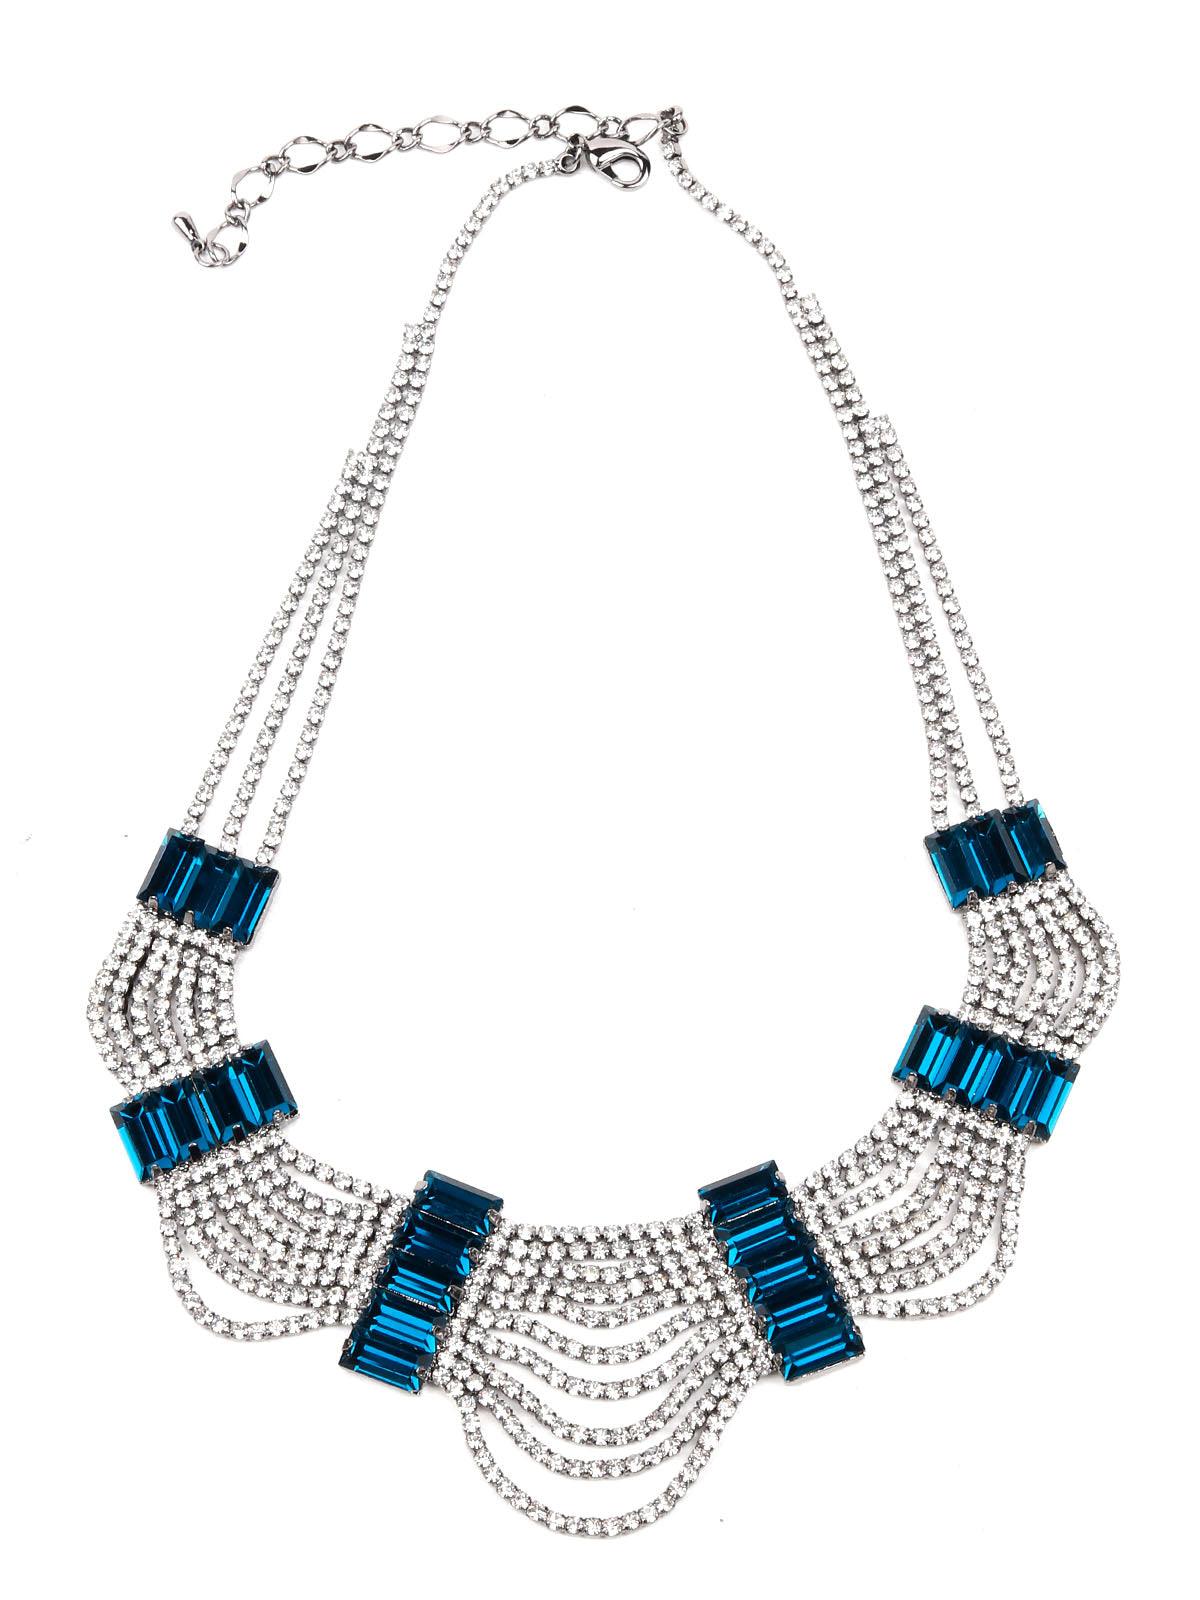 Women's Studded Statement Necklace Embellished With Blue Crystals - Odette